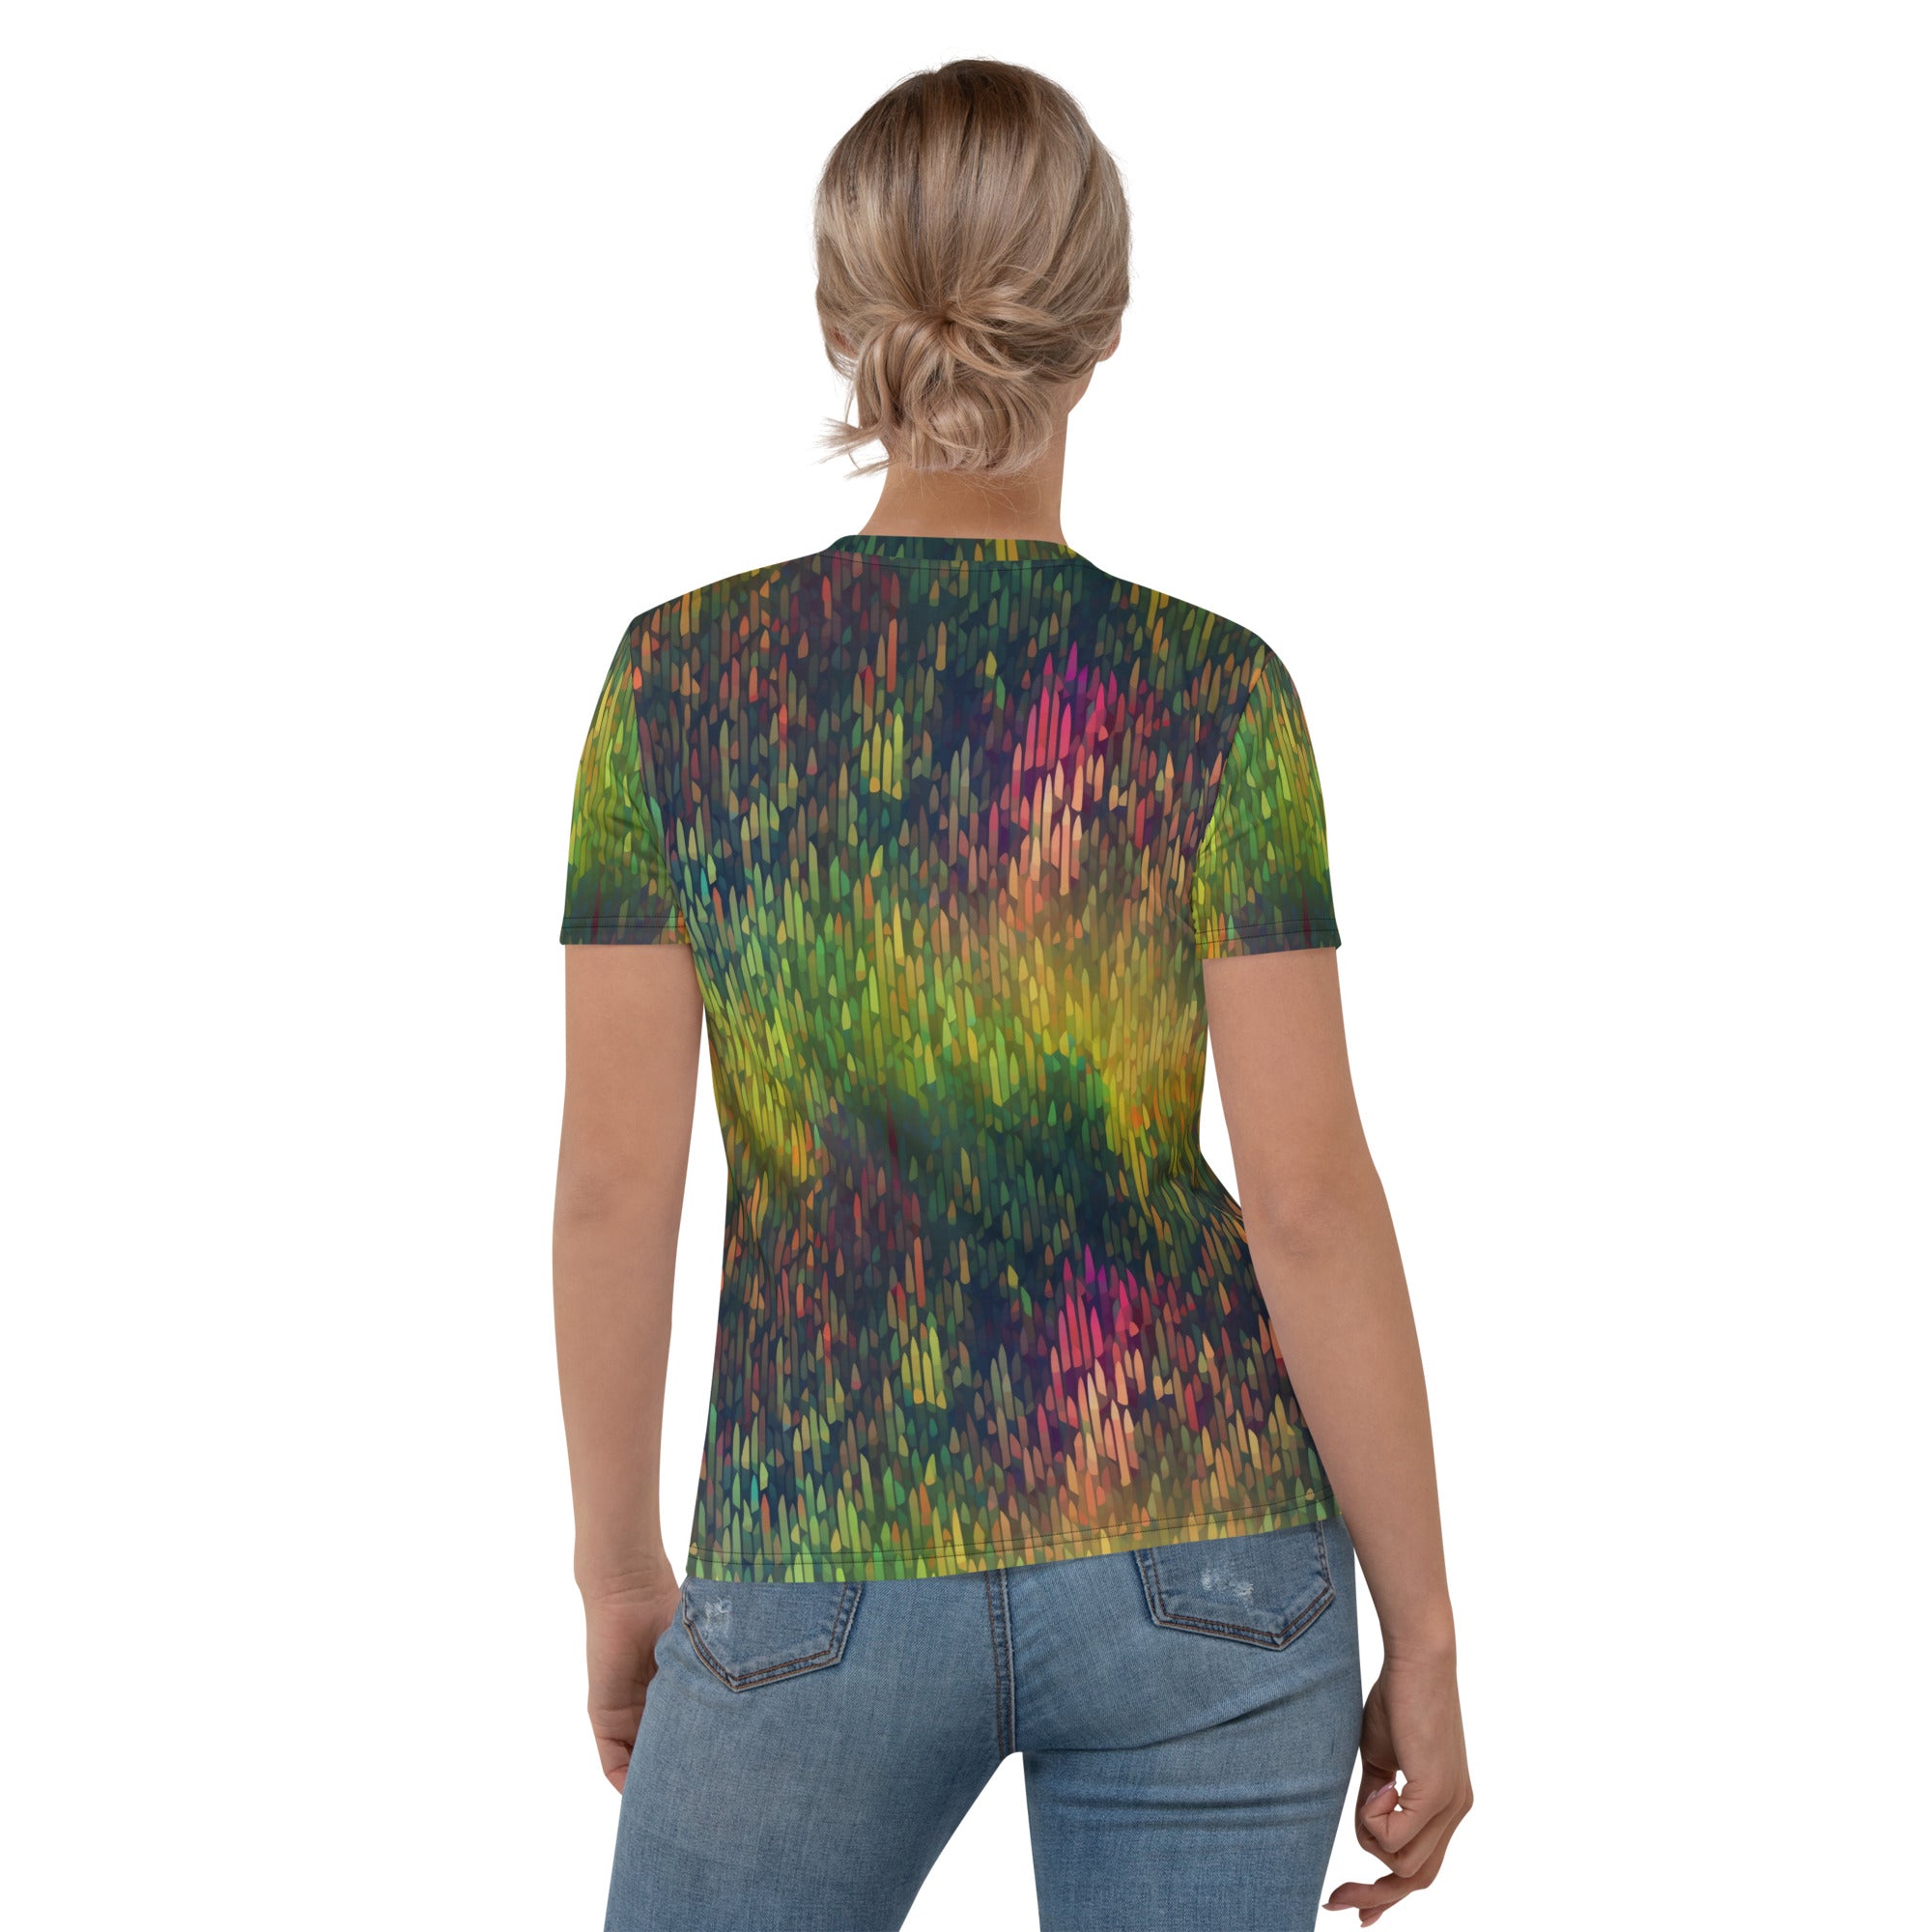 Women's T-shirt- Rainbow Forest Pattern 04